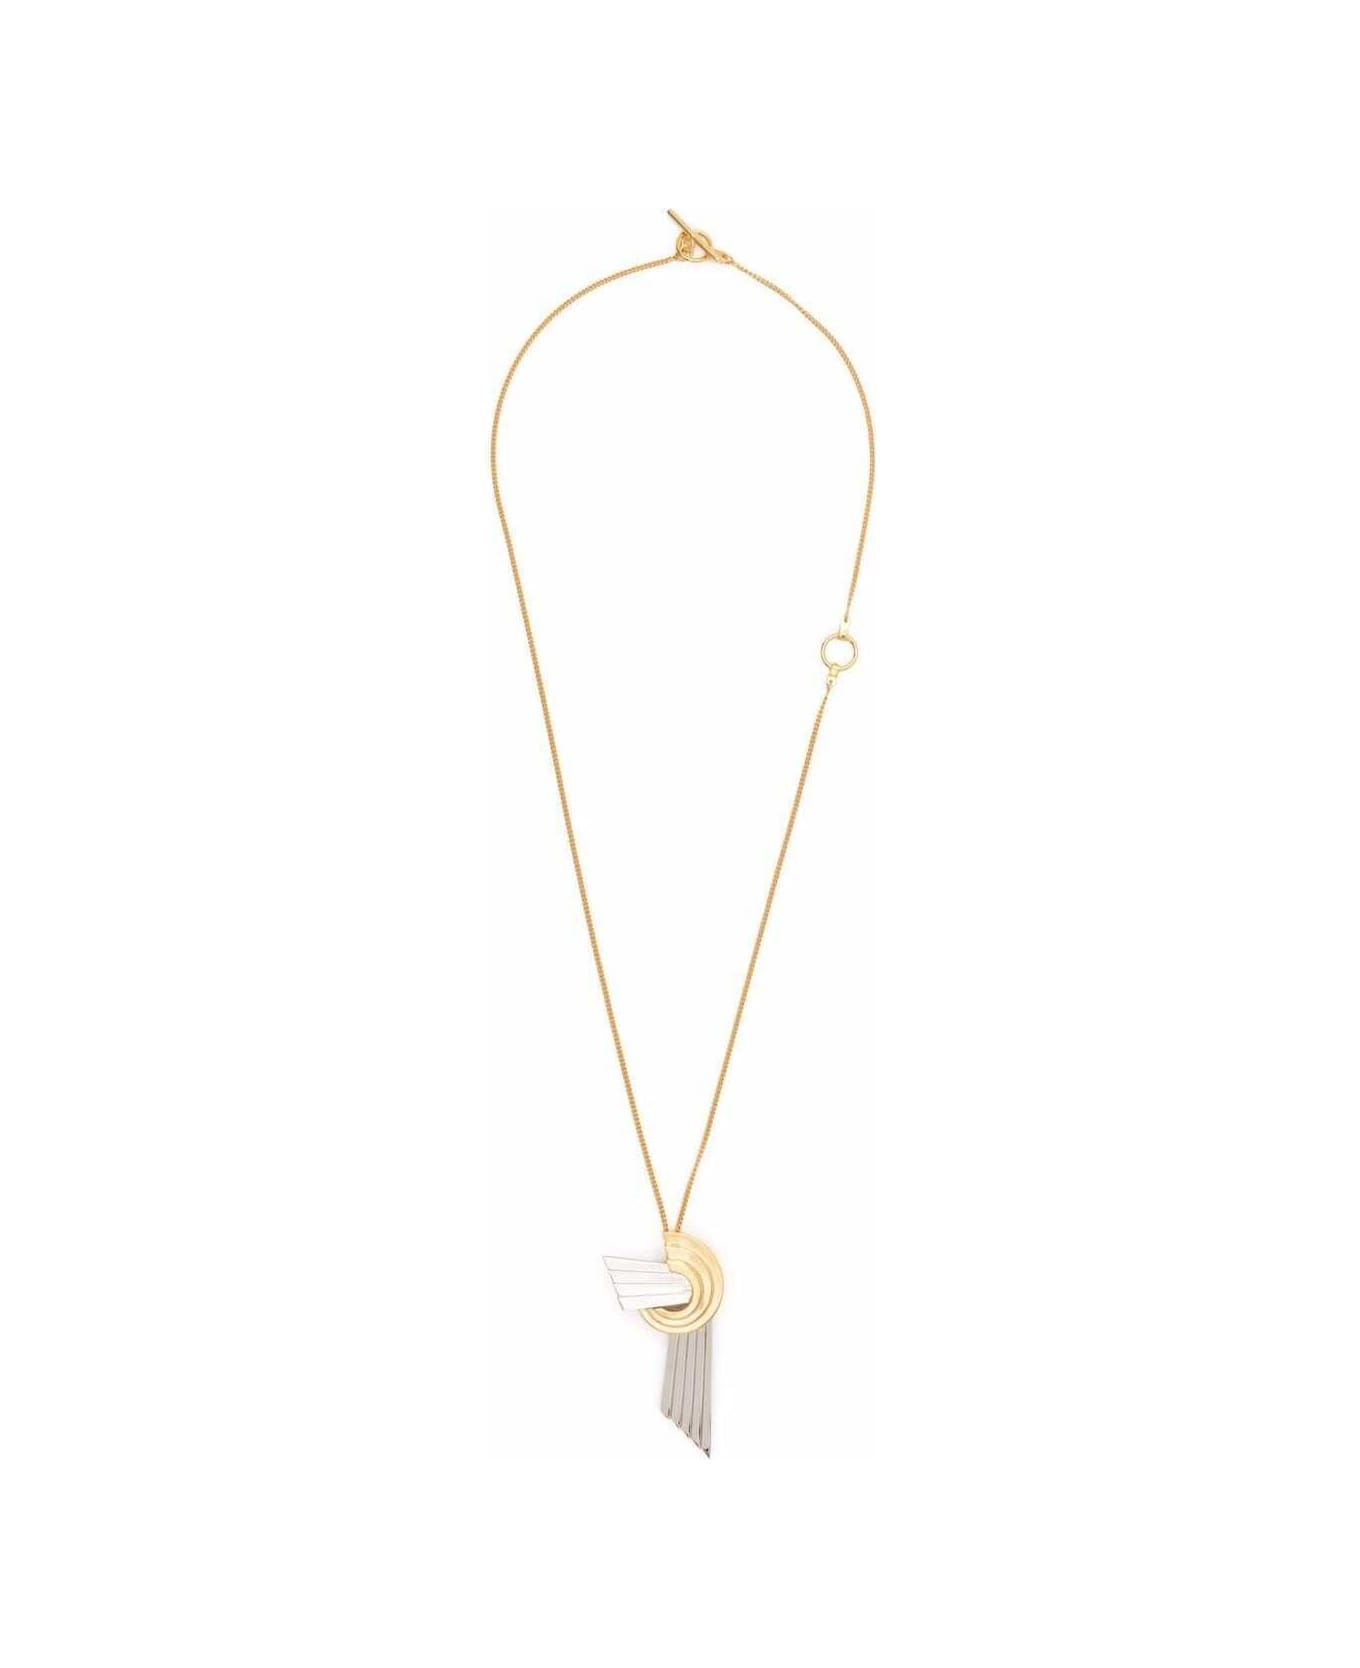 Leda Madera Meryl Brass Necklace With Pendant Detail - Metallic